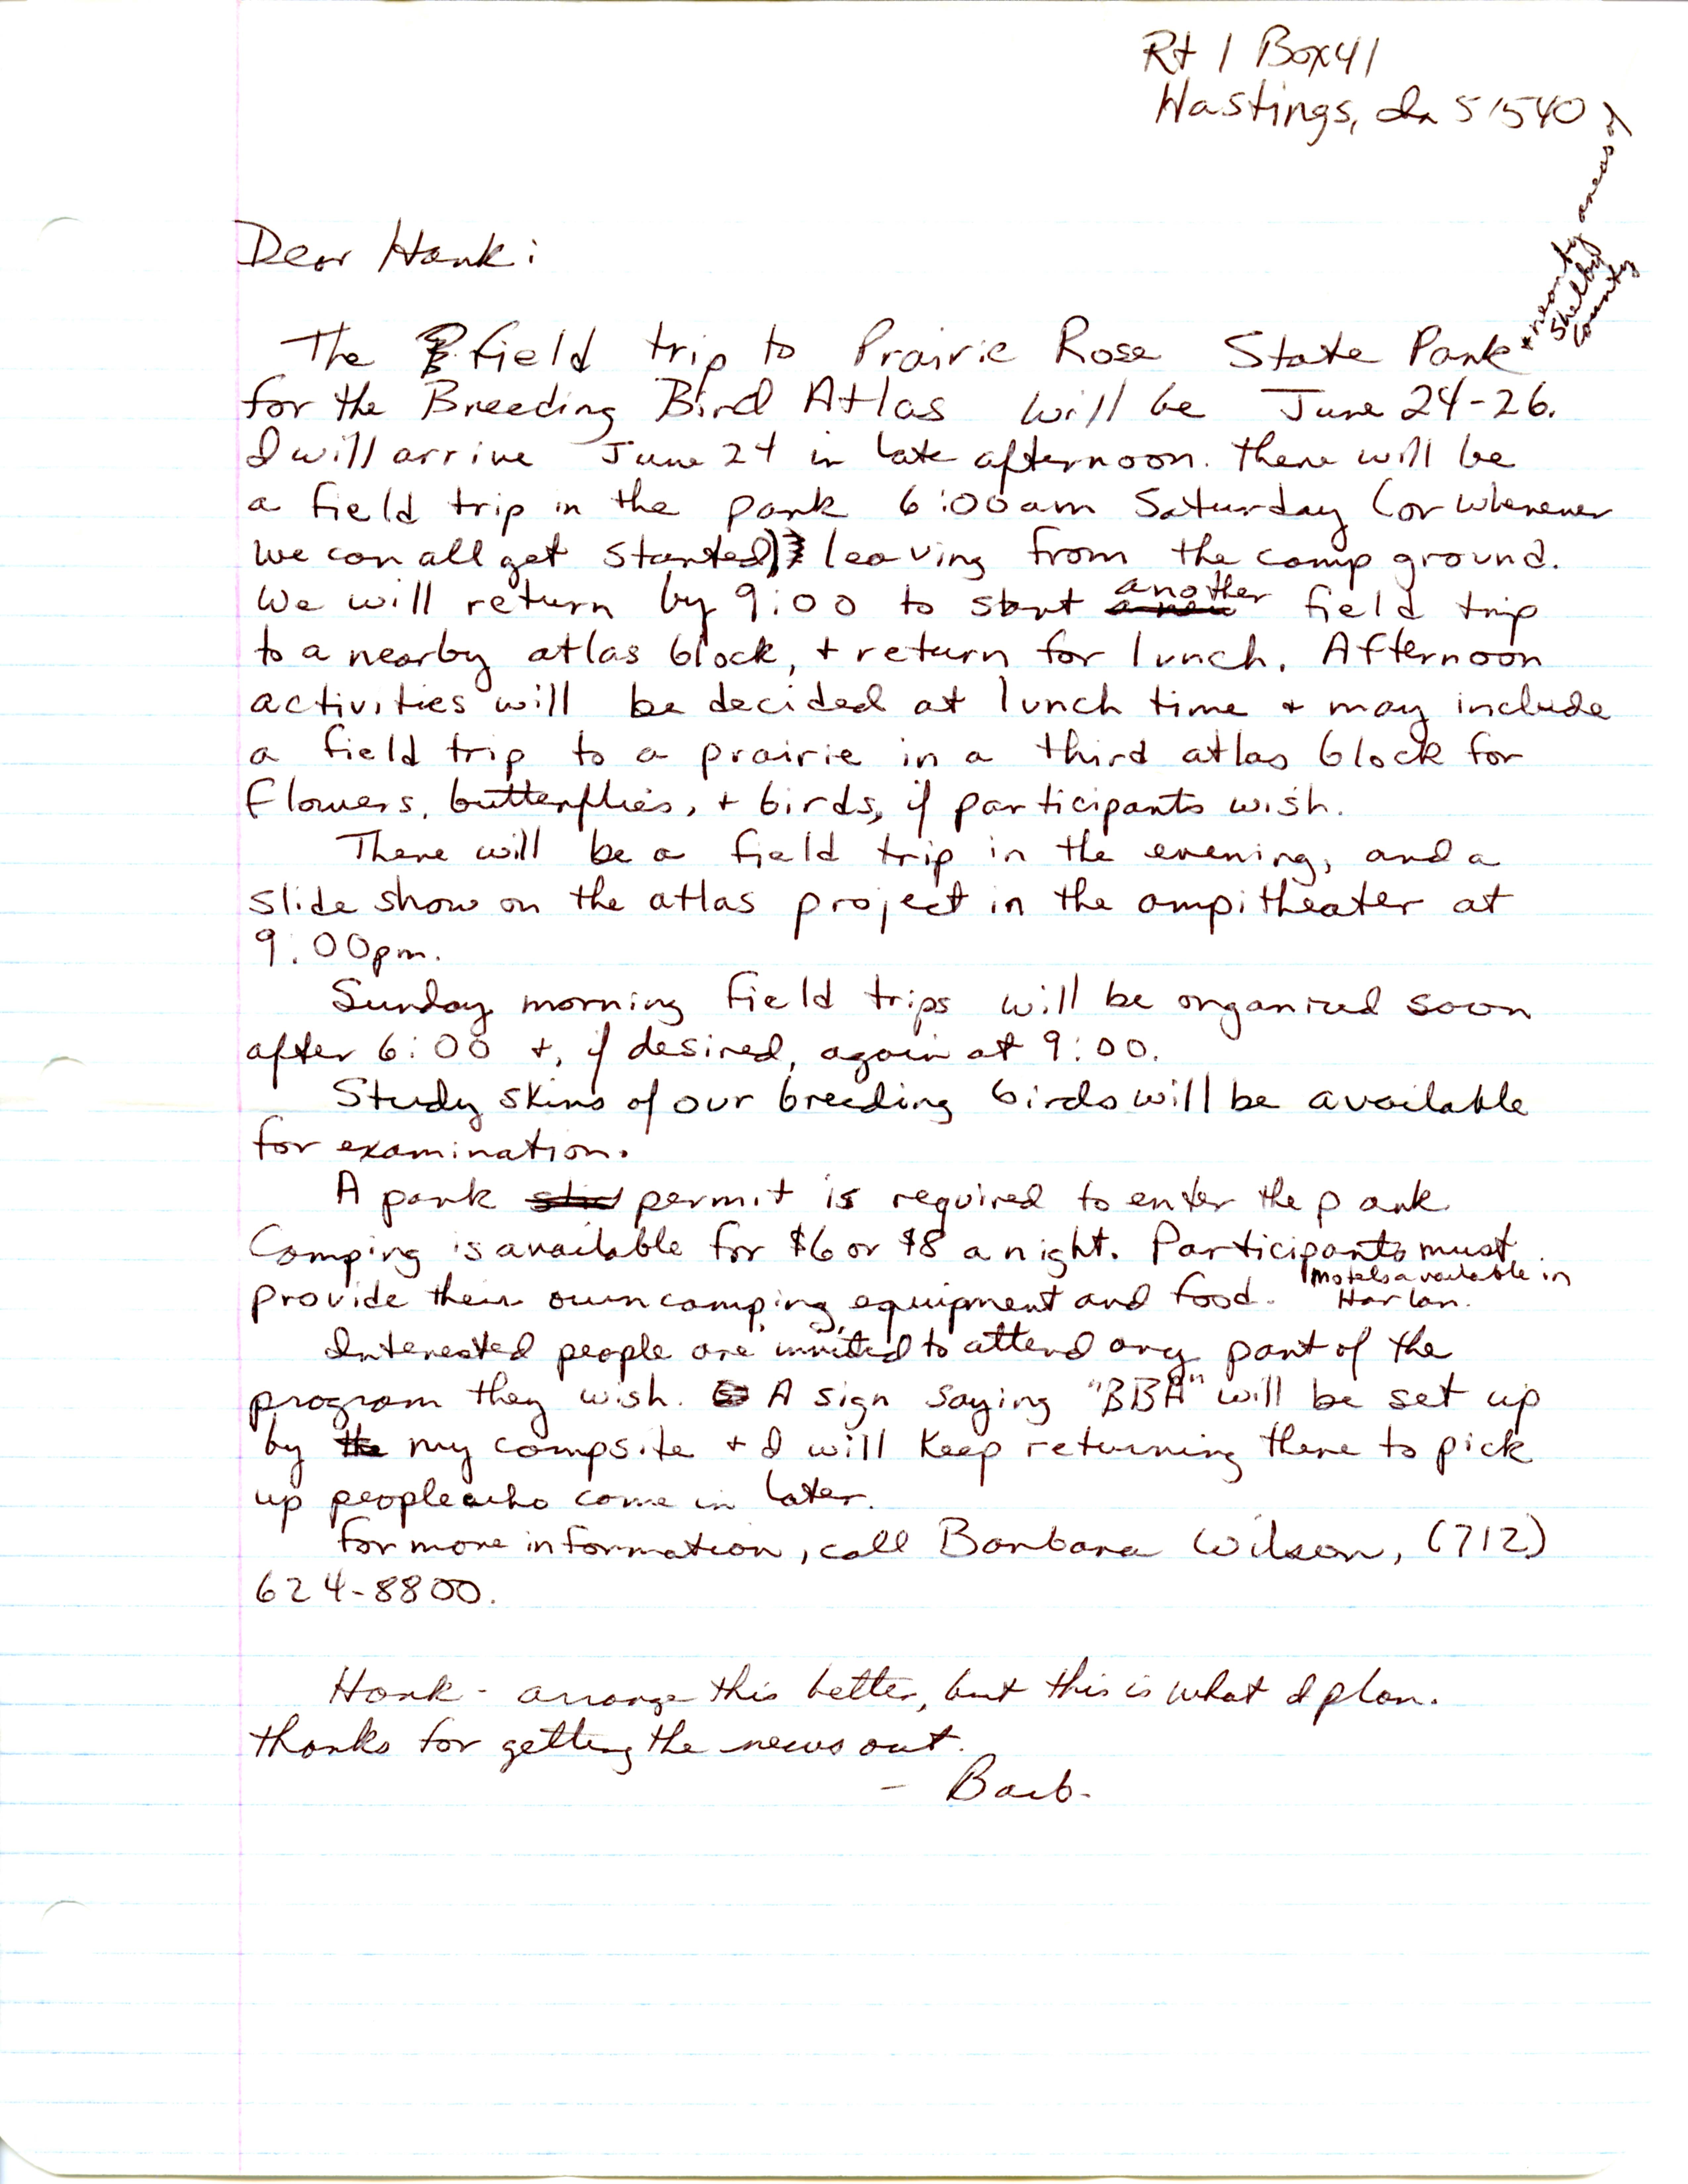 Barbara L. Wilson letter to Hank Zaletel regarding an upcoming field trip 